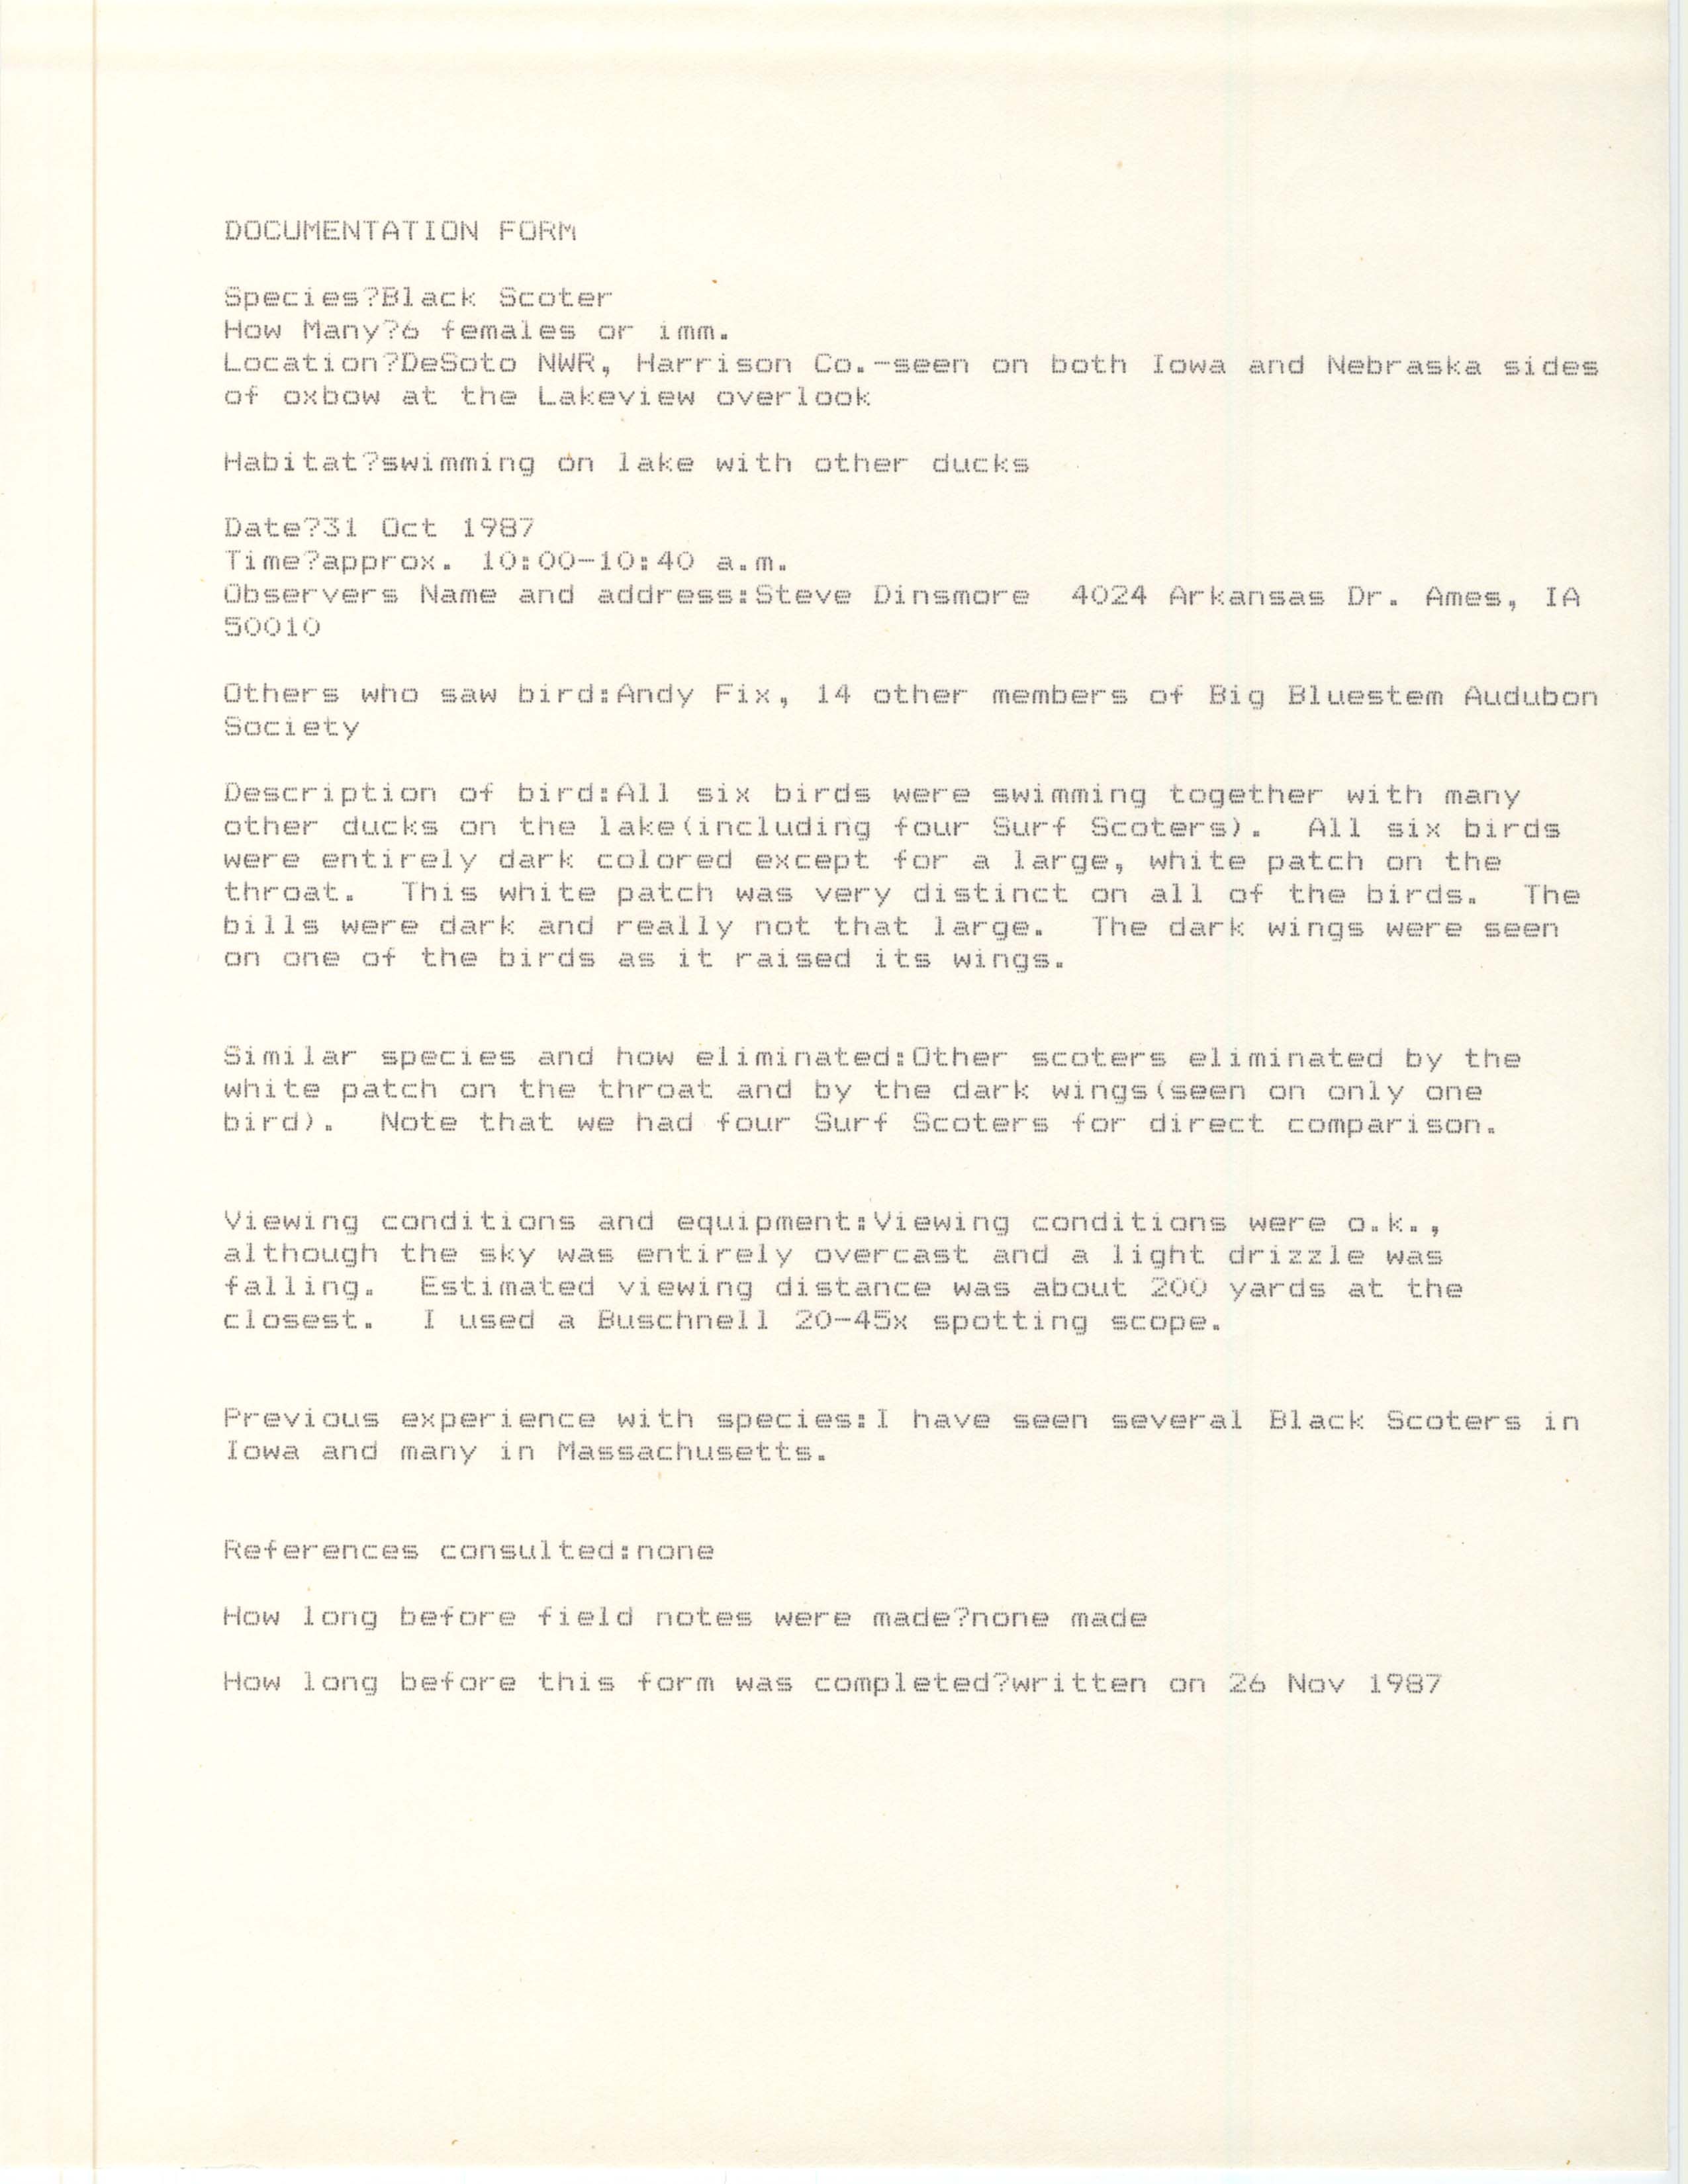 Rare bird documentation form for Black Scoter at DeSoto National Wildlife Refuge, 1987